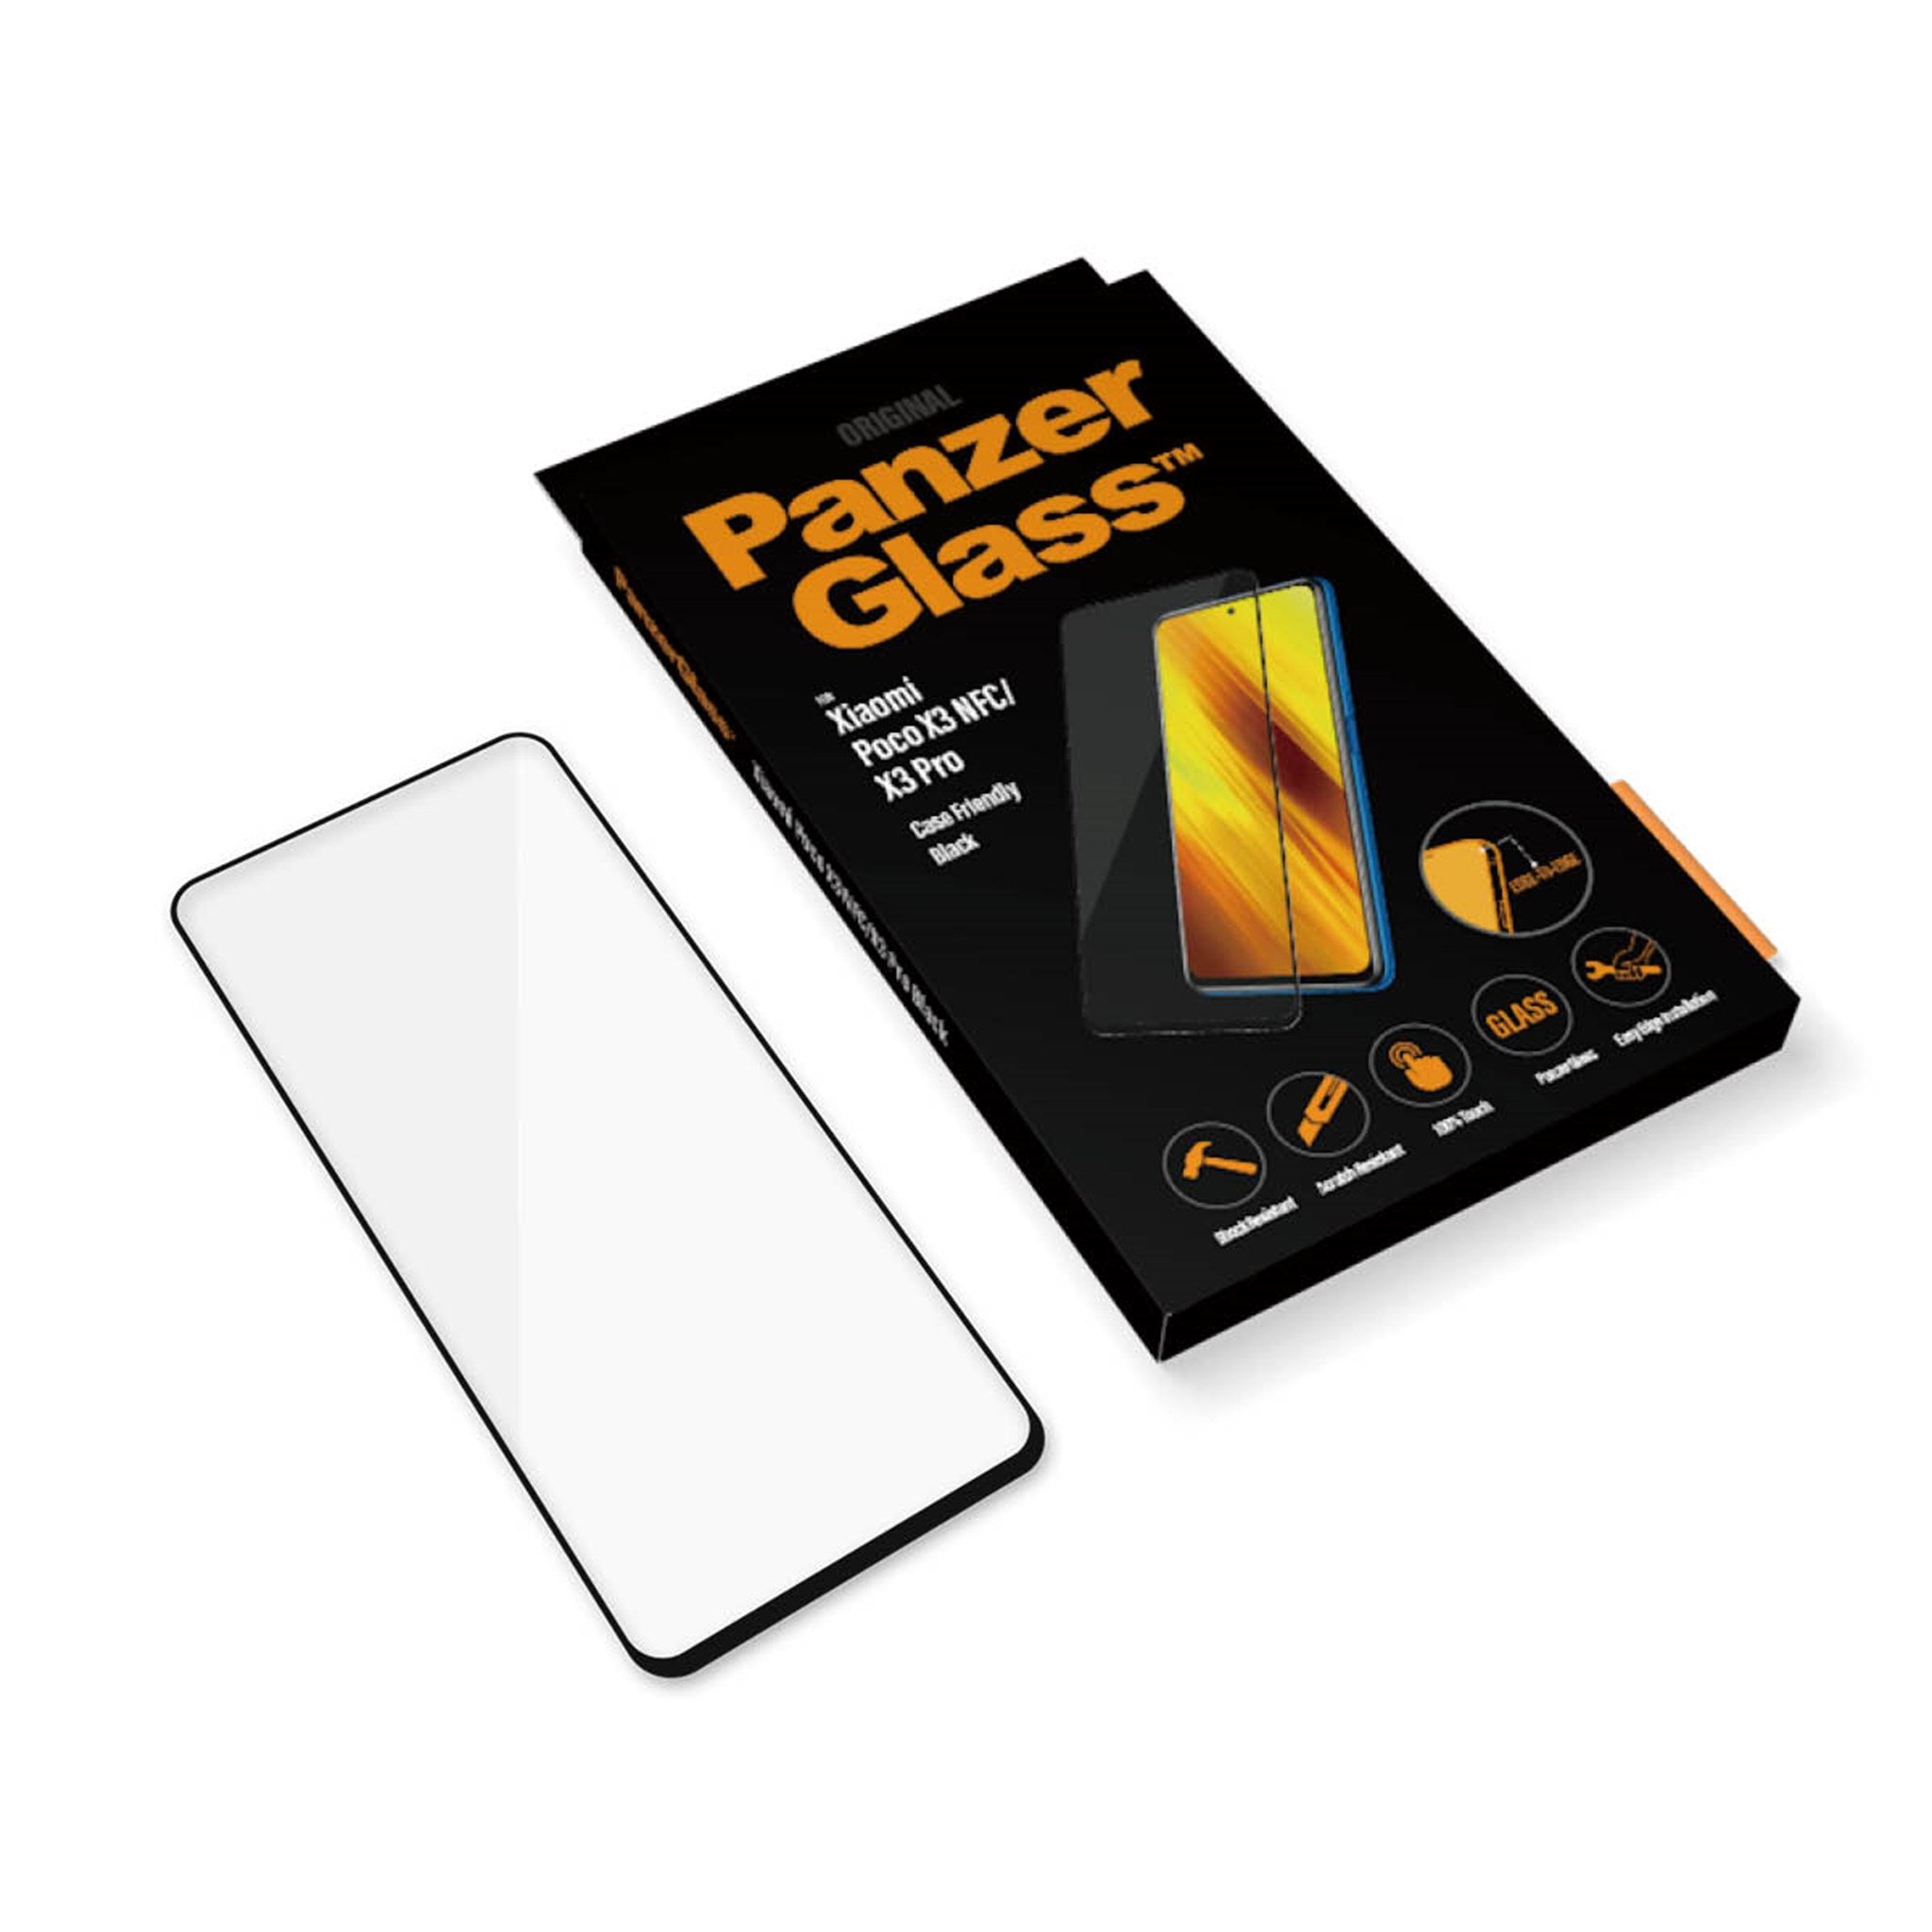 Vitre de protection en verre trempé Xiaomi Poco X3 Pro - TM Concept®